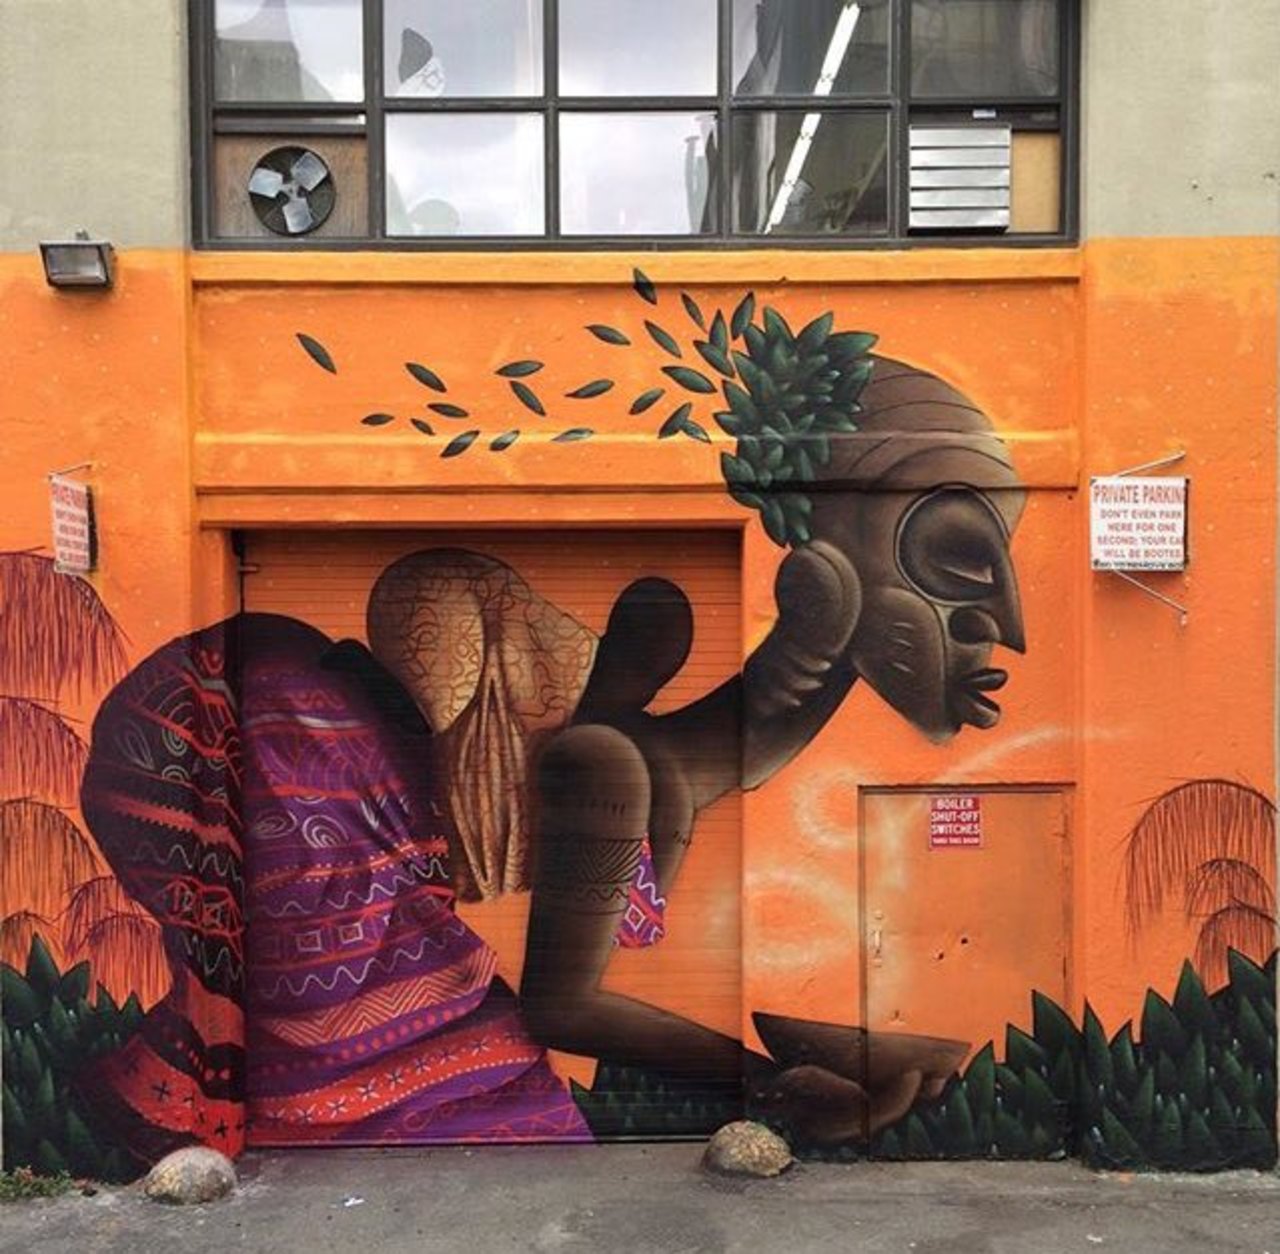 New Street Art by Alexandre Keto in NYC 

#art #graffiti #mural #streetart https://t.co/t01aofNPb7